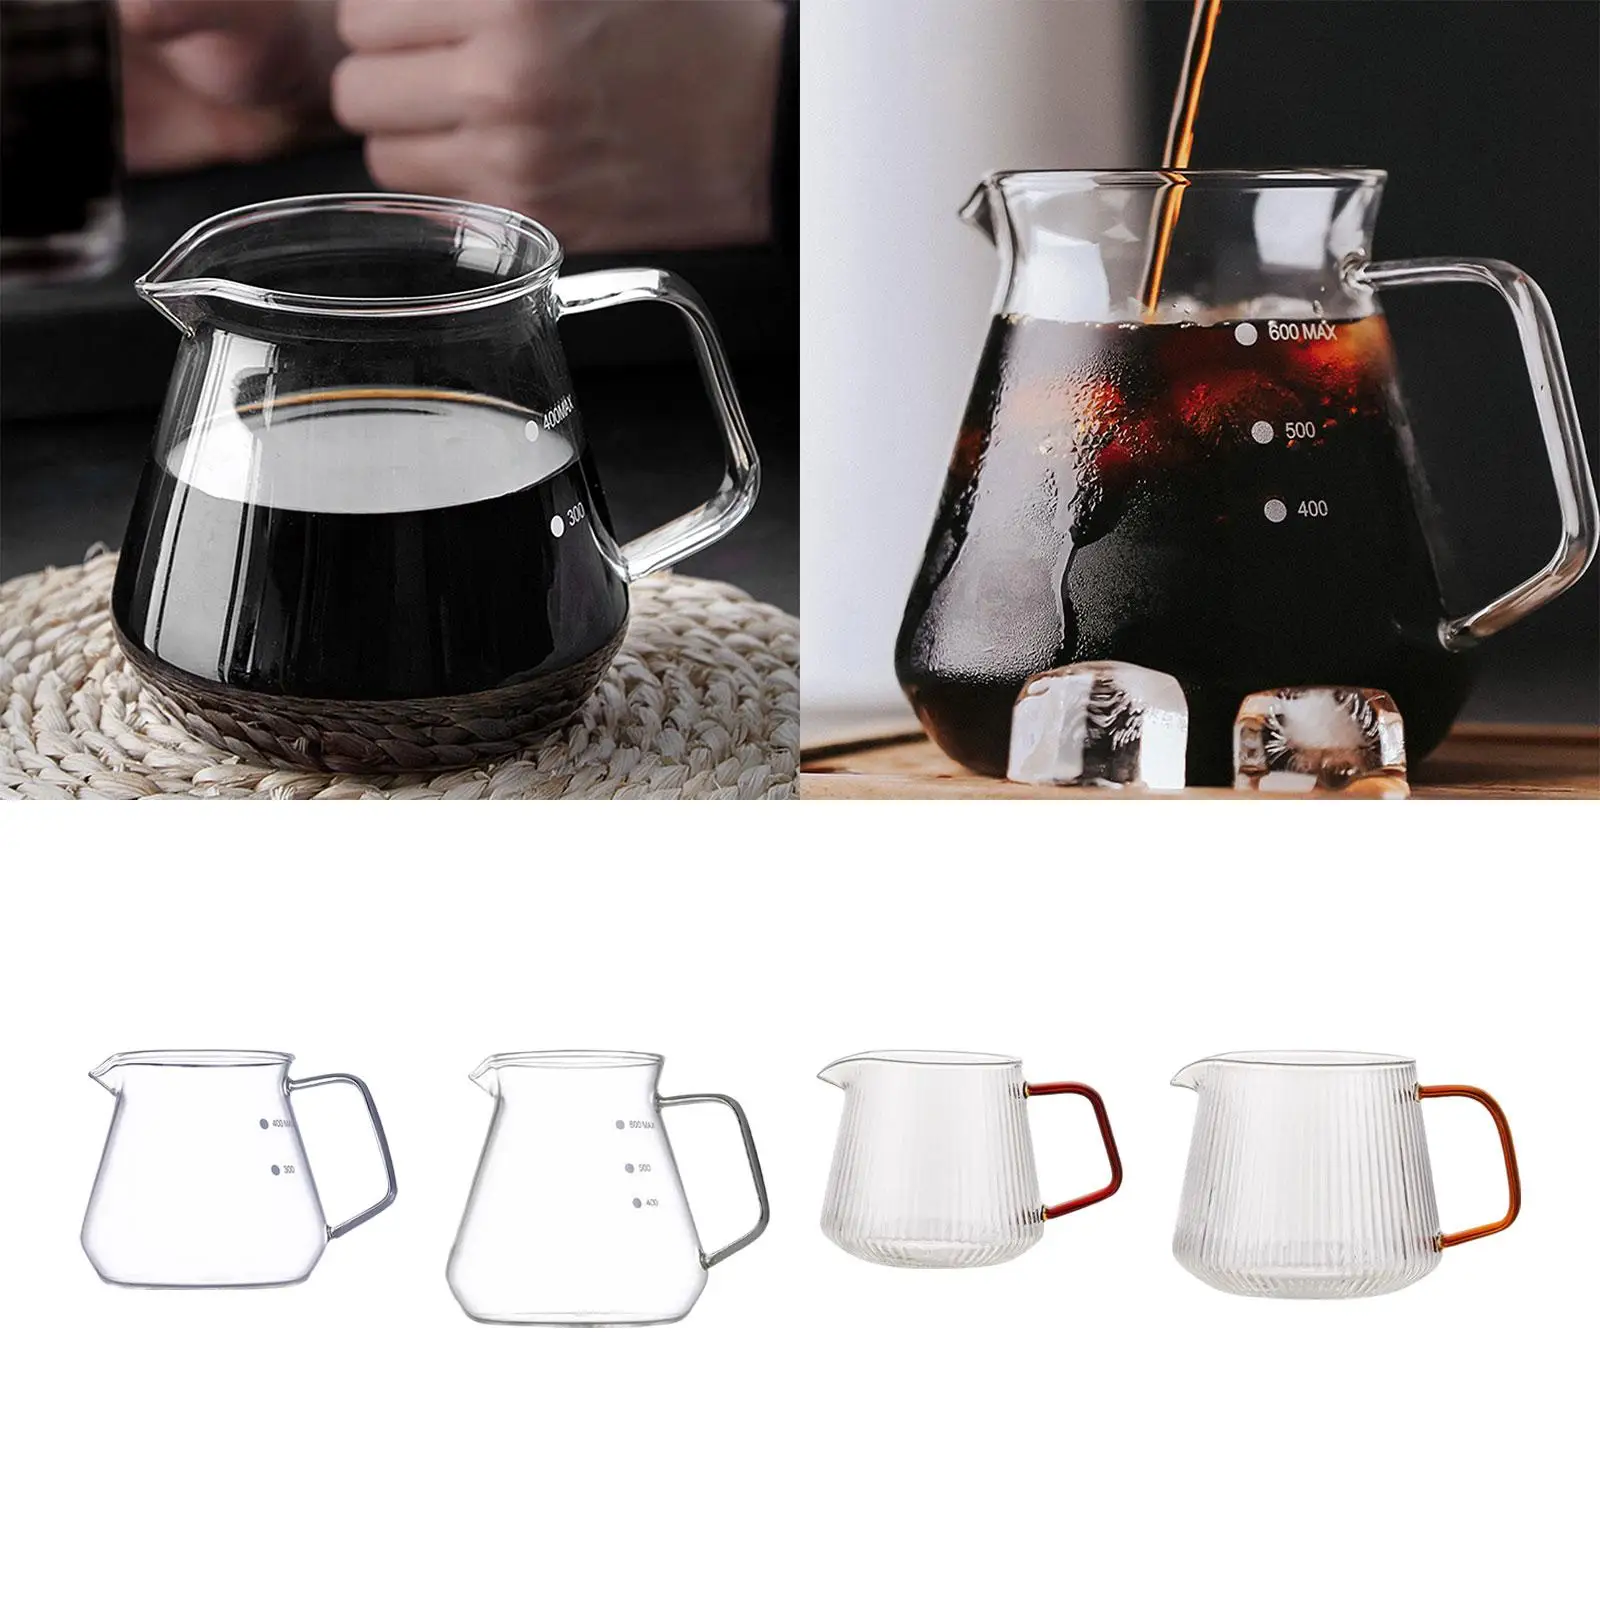 Pour over Coffee Maker Pot Maker Pot for Travel Restaurants